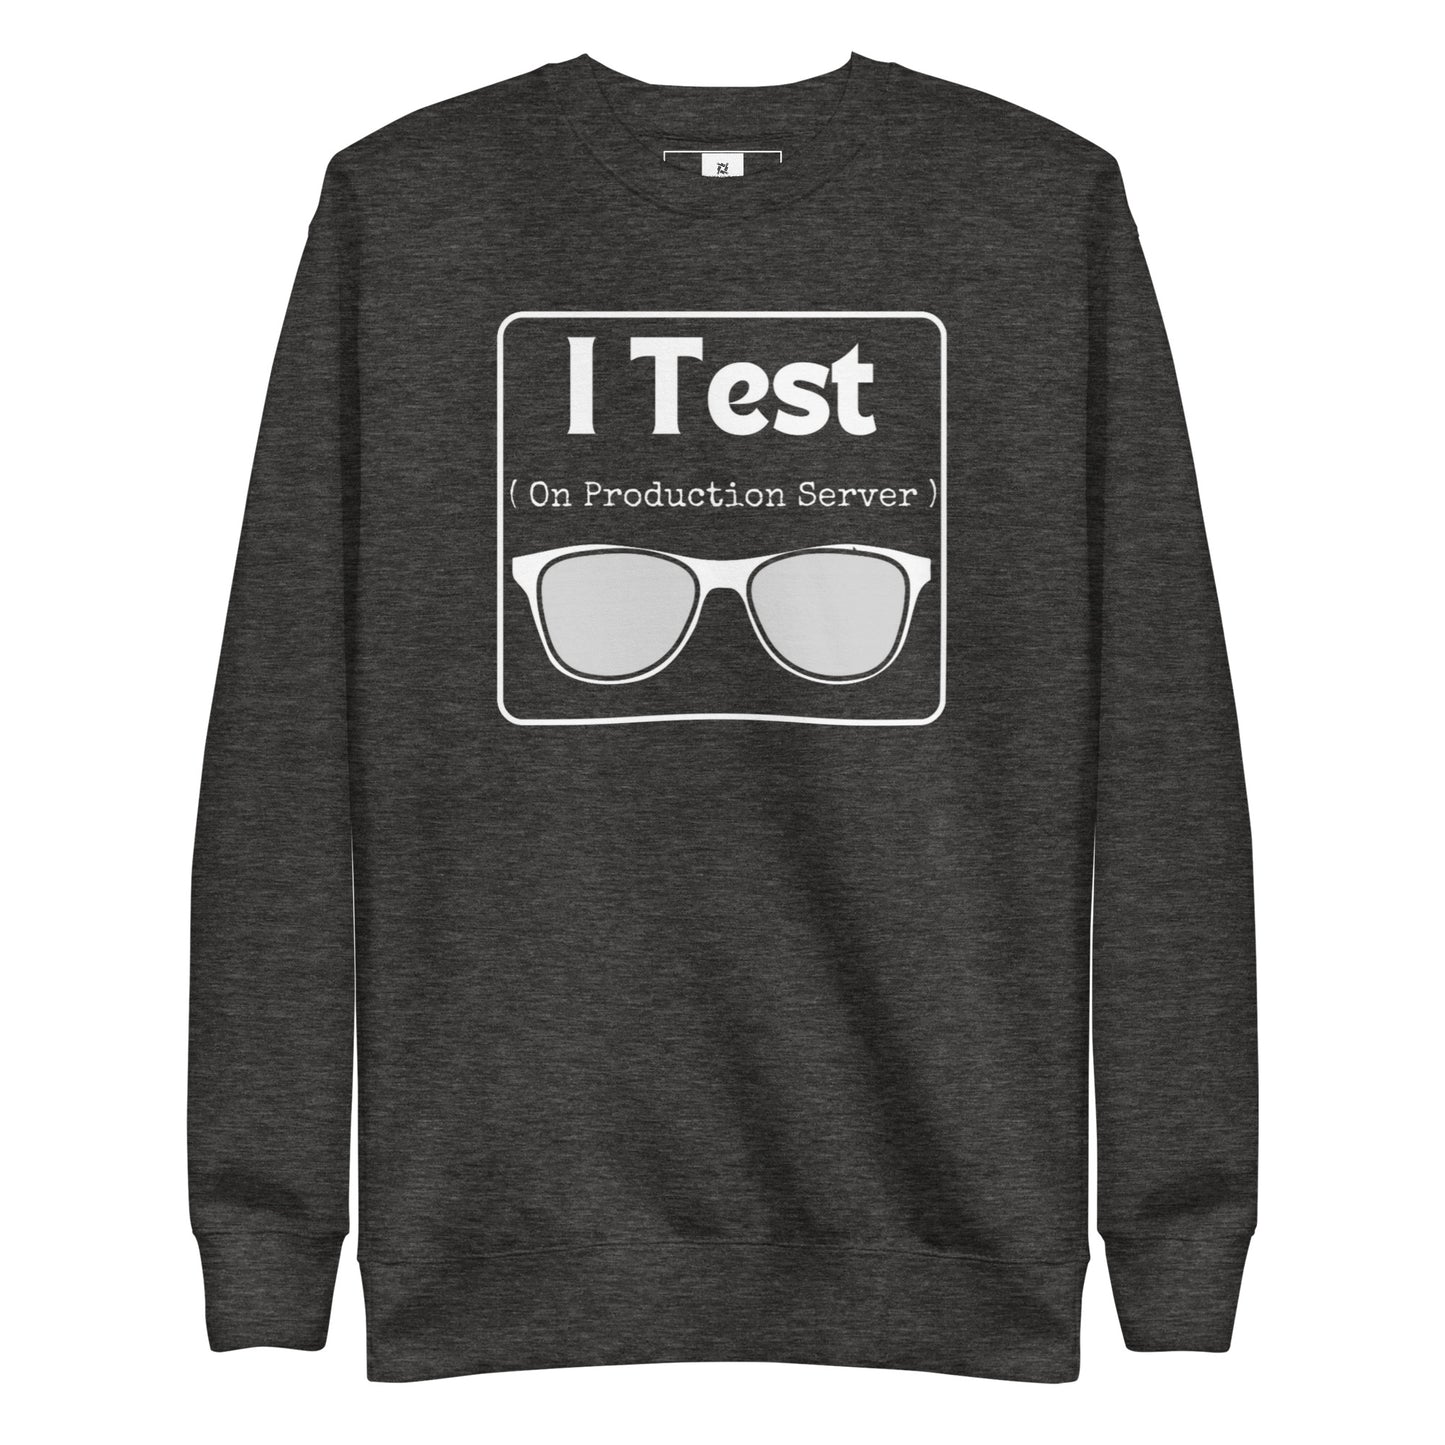 I Test on Production Premium Sweatshirt